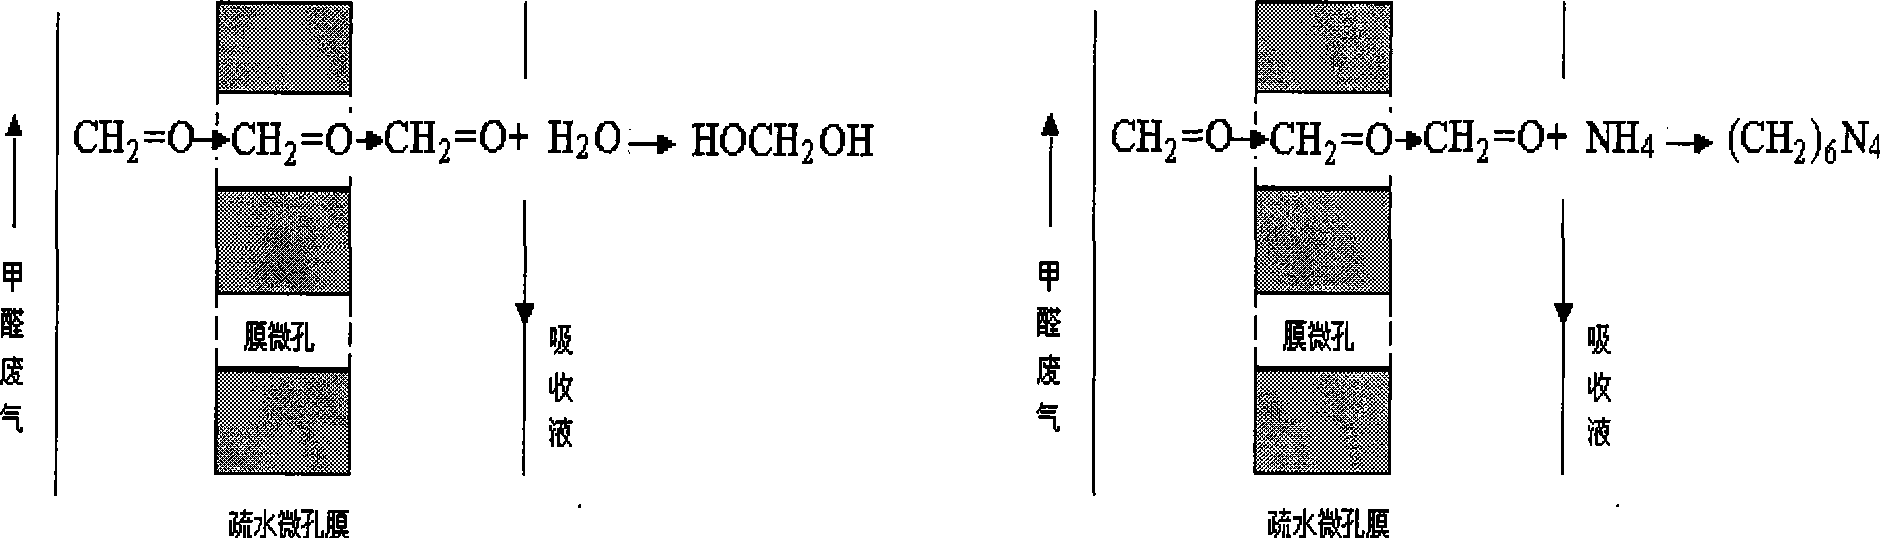 Formaldehyde exhaust-gas efficient film absorption technique